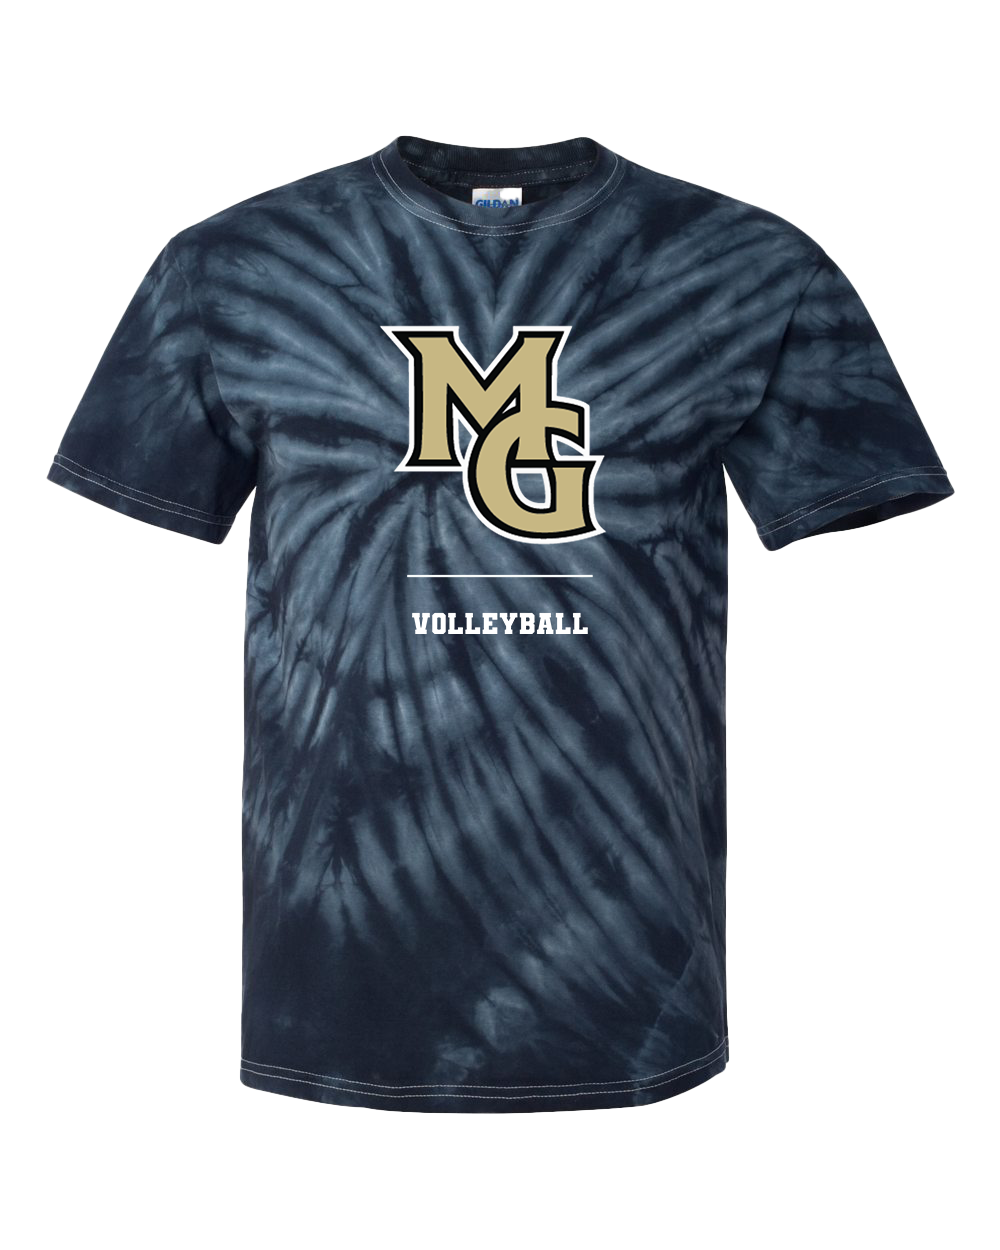 Madison Grant Argylls Volleyball Tie Dye Tshirt - Black